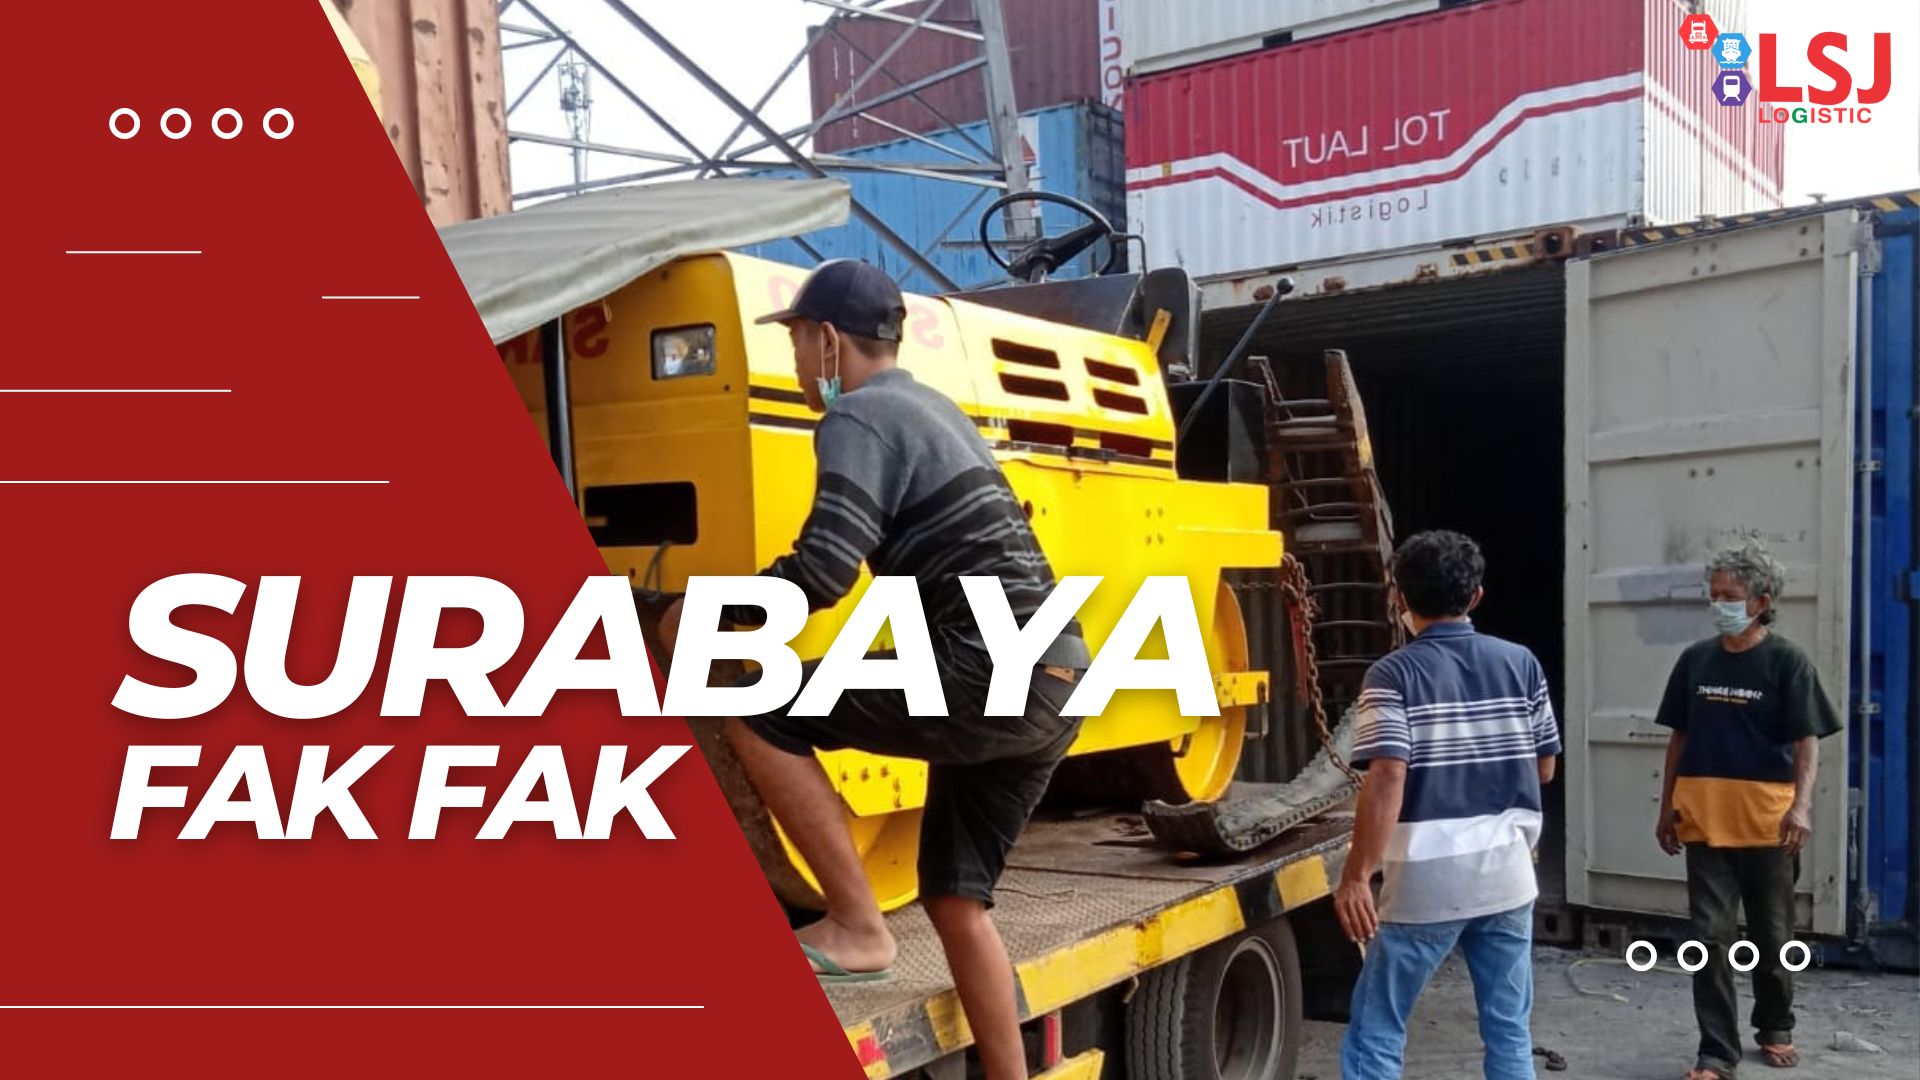 Tarif Pengiriman Container Surabaya Fak Fak